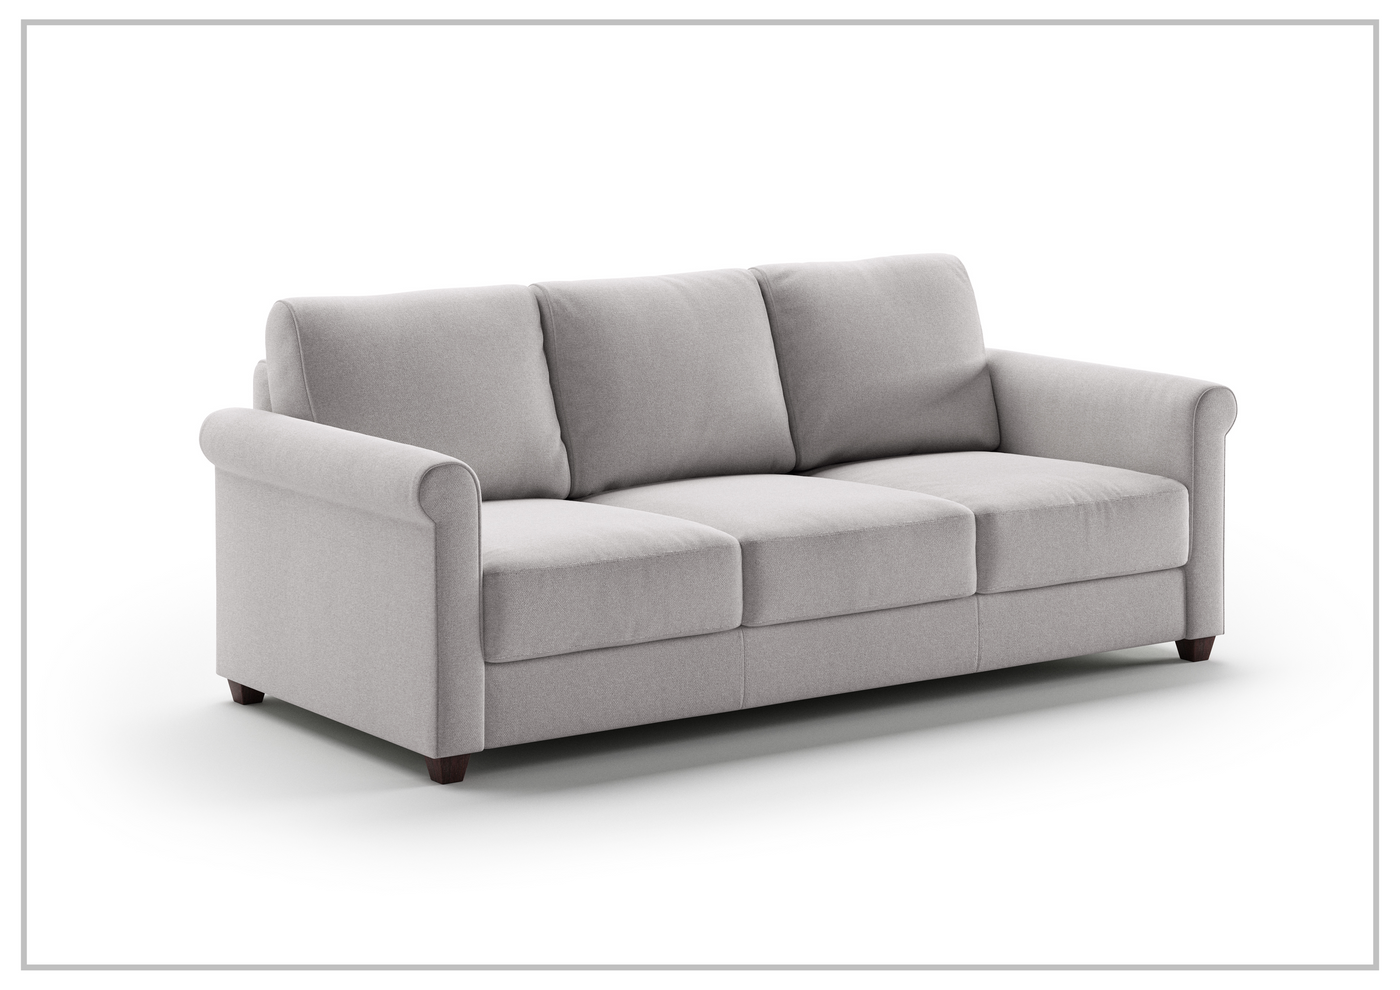 Luonto Rosalind Fabric Sofa Sleeper with Under-Seat Storage